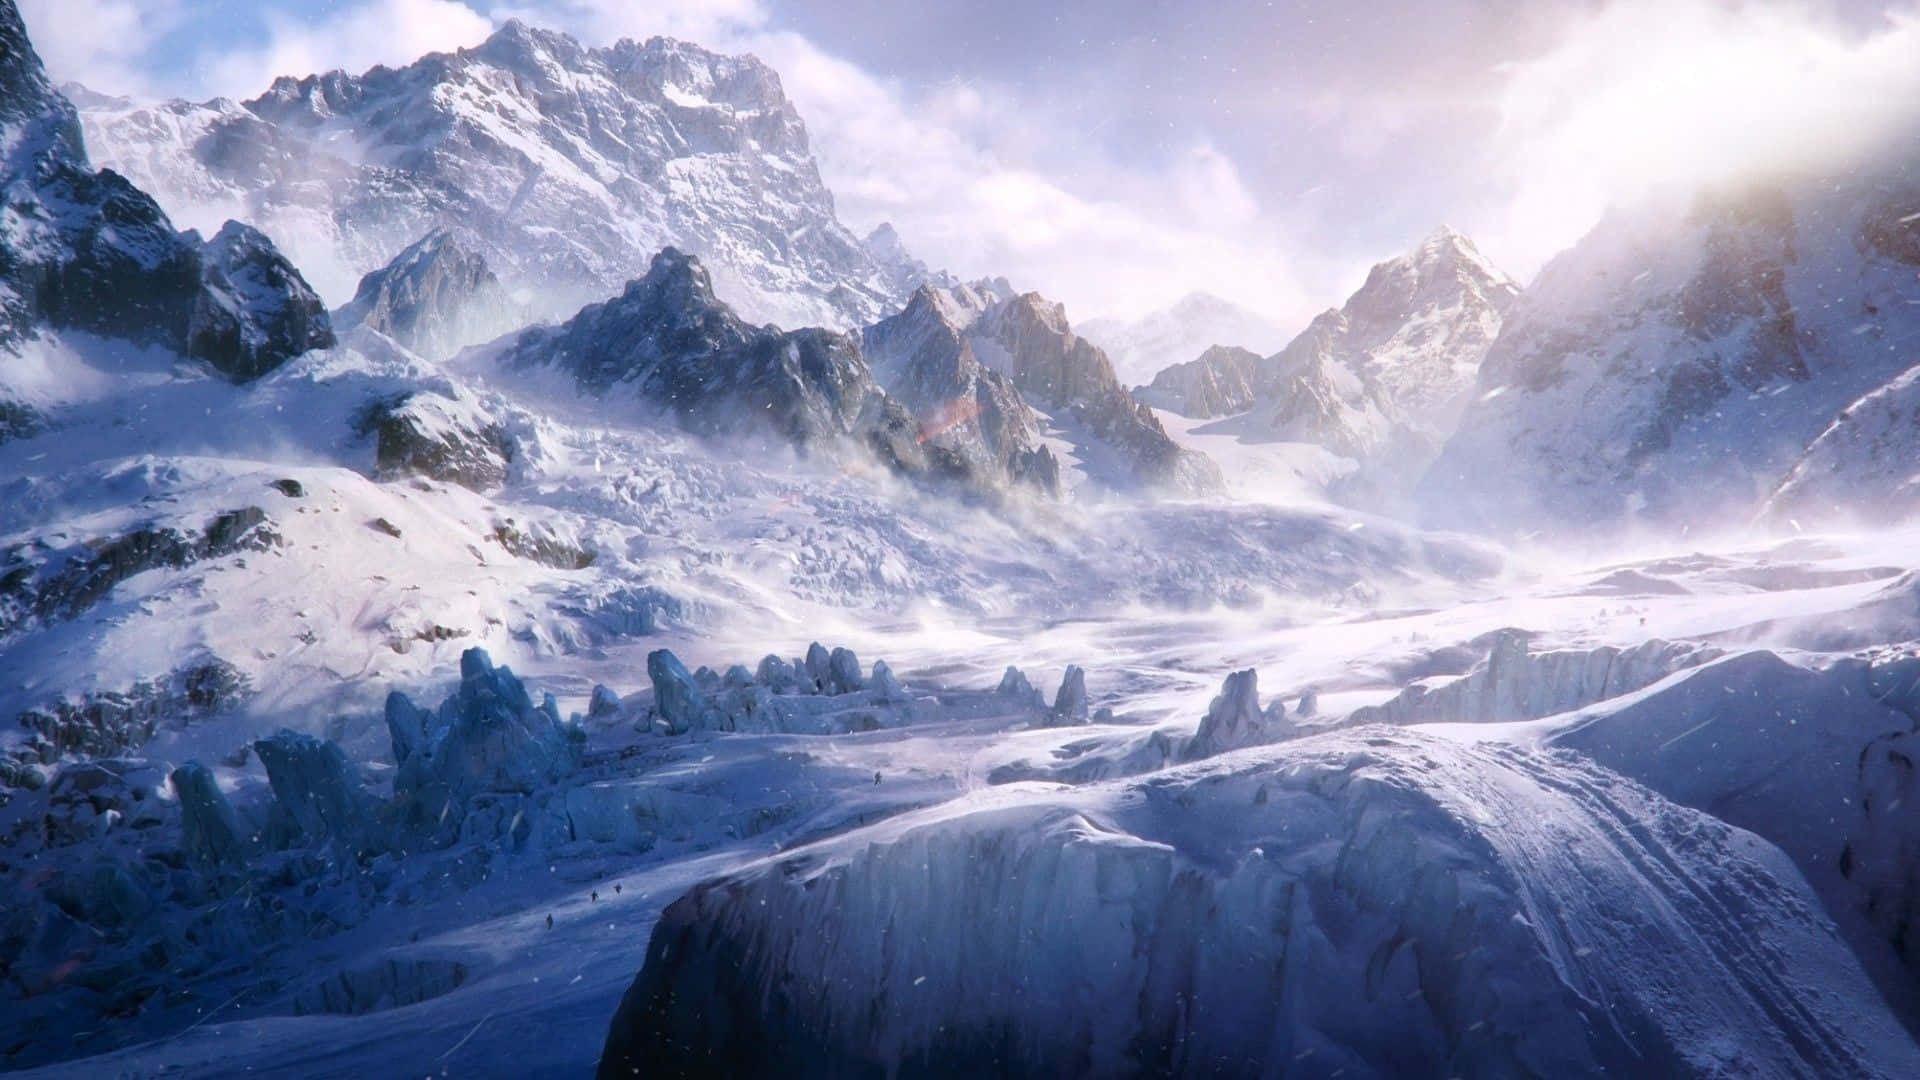 Caption: Majestic Snowy Landscape Wallpaper